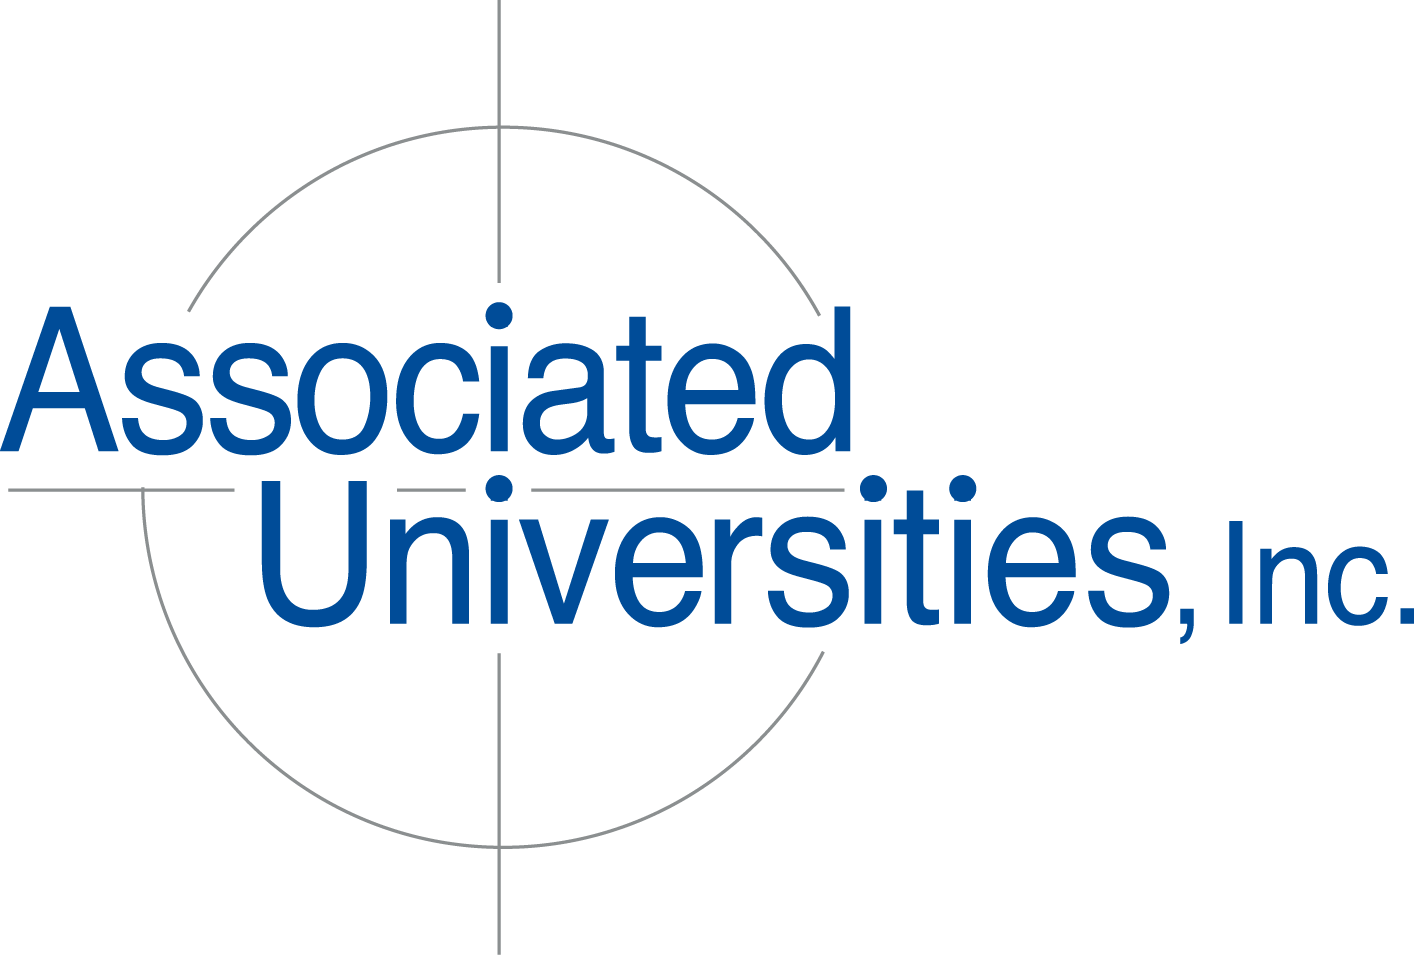 Associated Universities, Inc